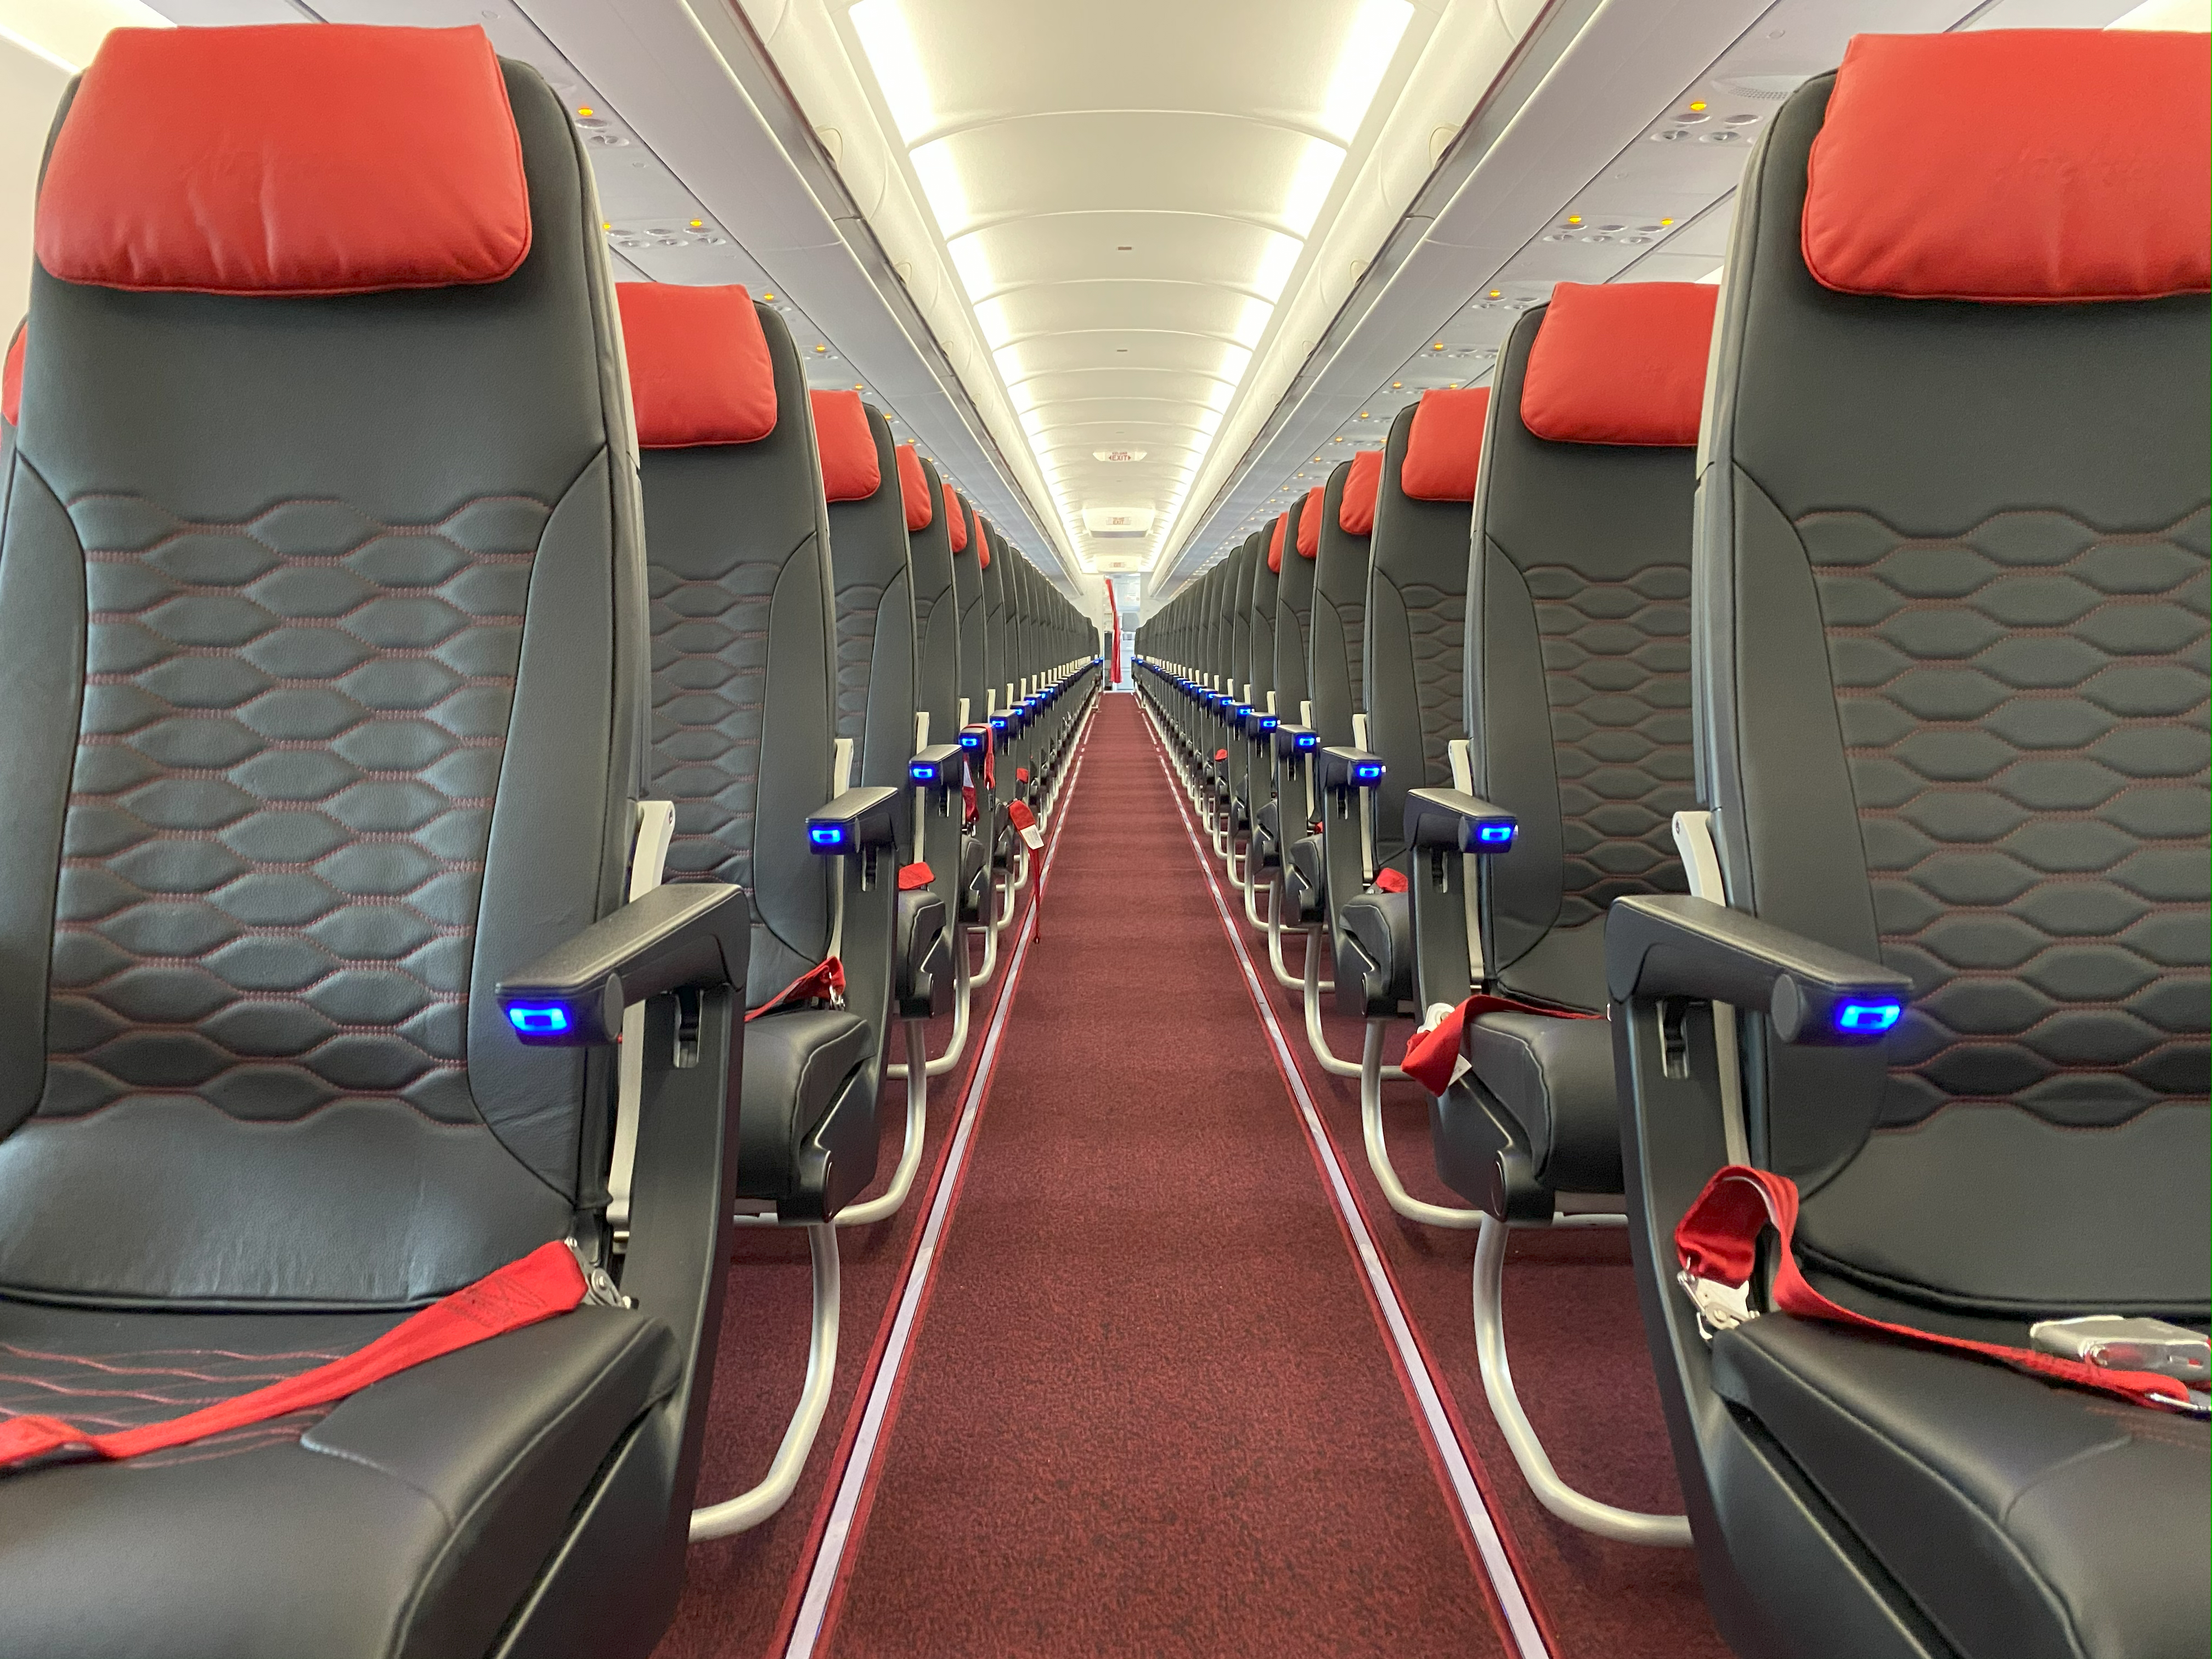 Mirus seats on a plane